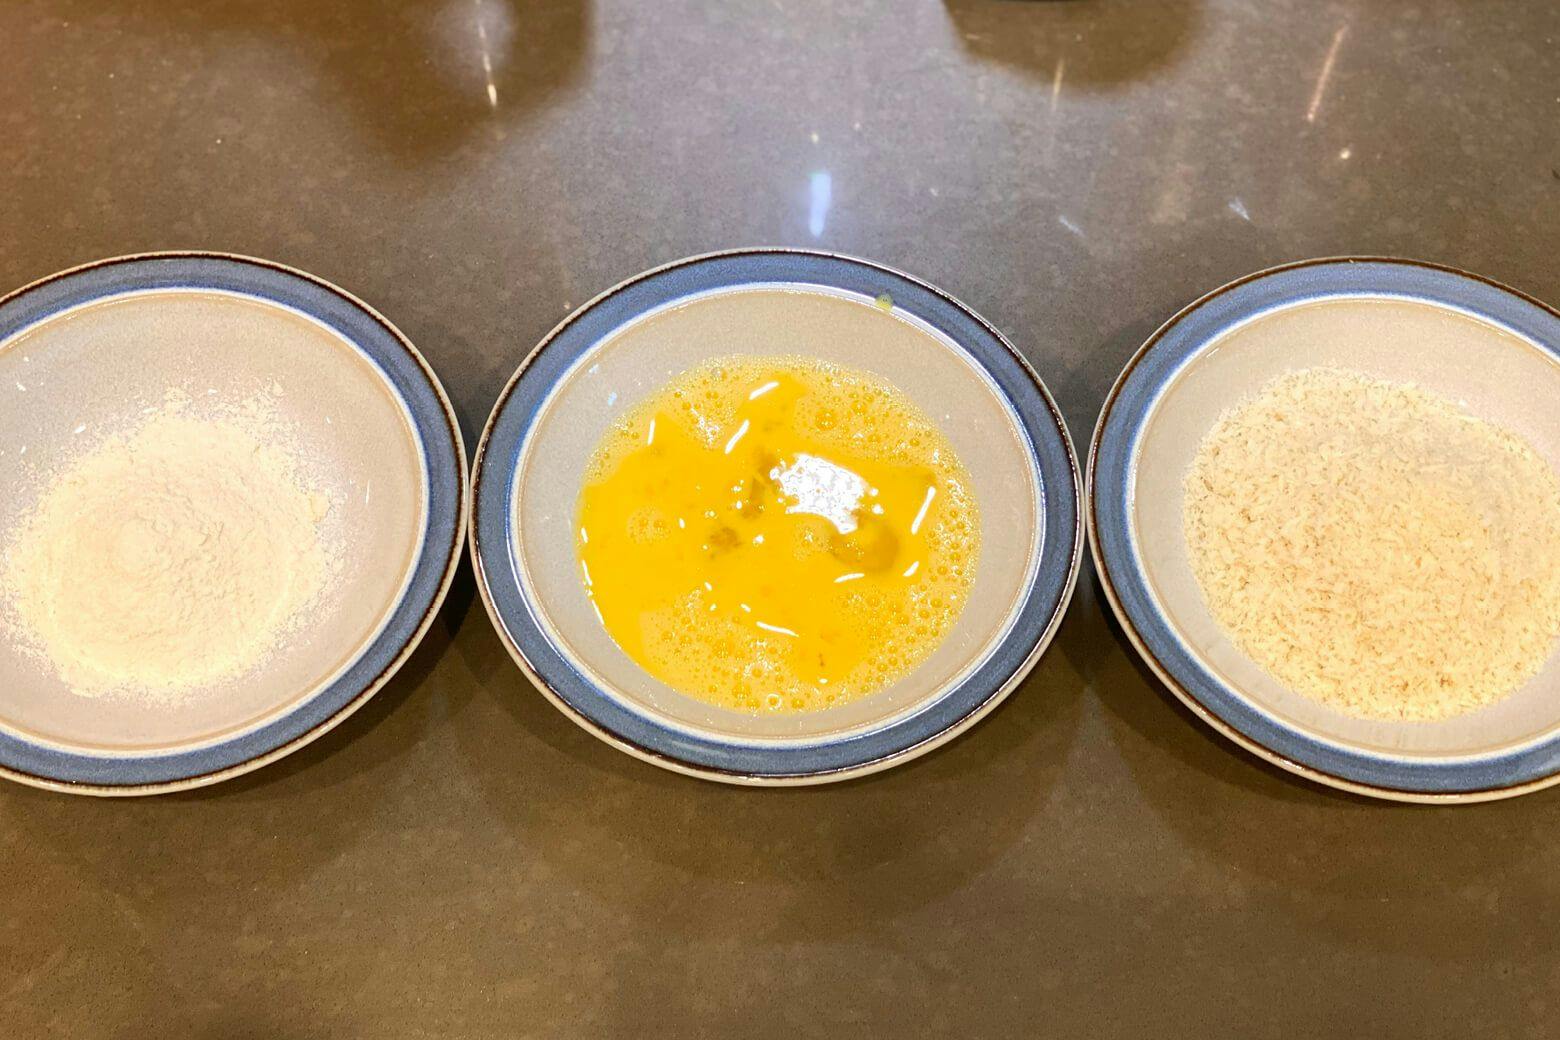 Preparing flour, beaten eggs, and panko in separate bowls